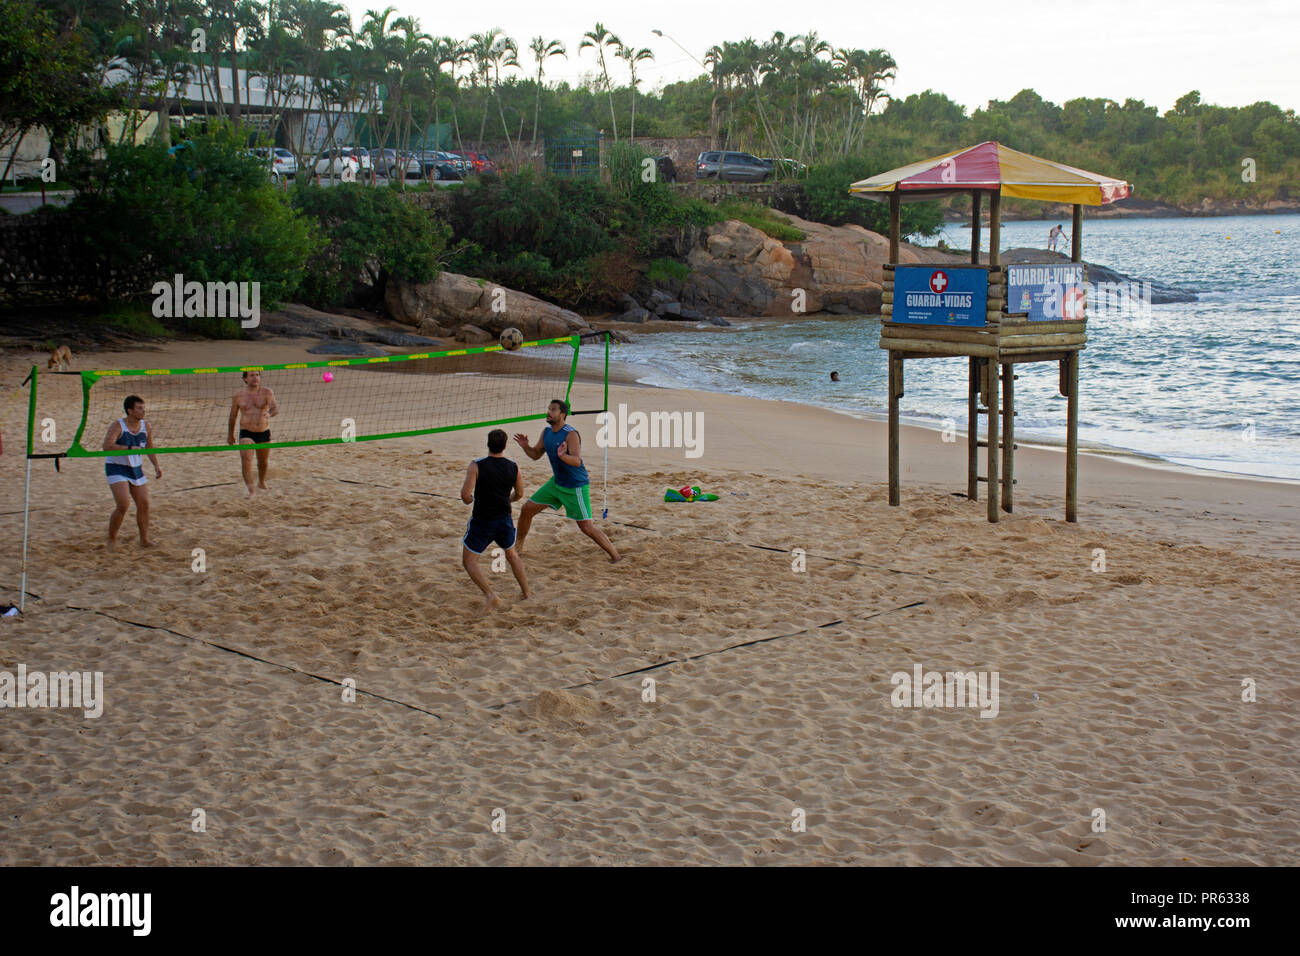 Ragazzi giocare footvolleyball, Praia da Costa, Vila Velha, Espirito Santo, Brasile Foto Stock